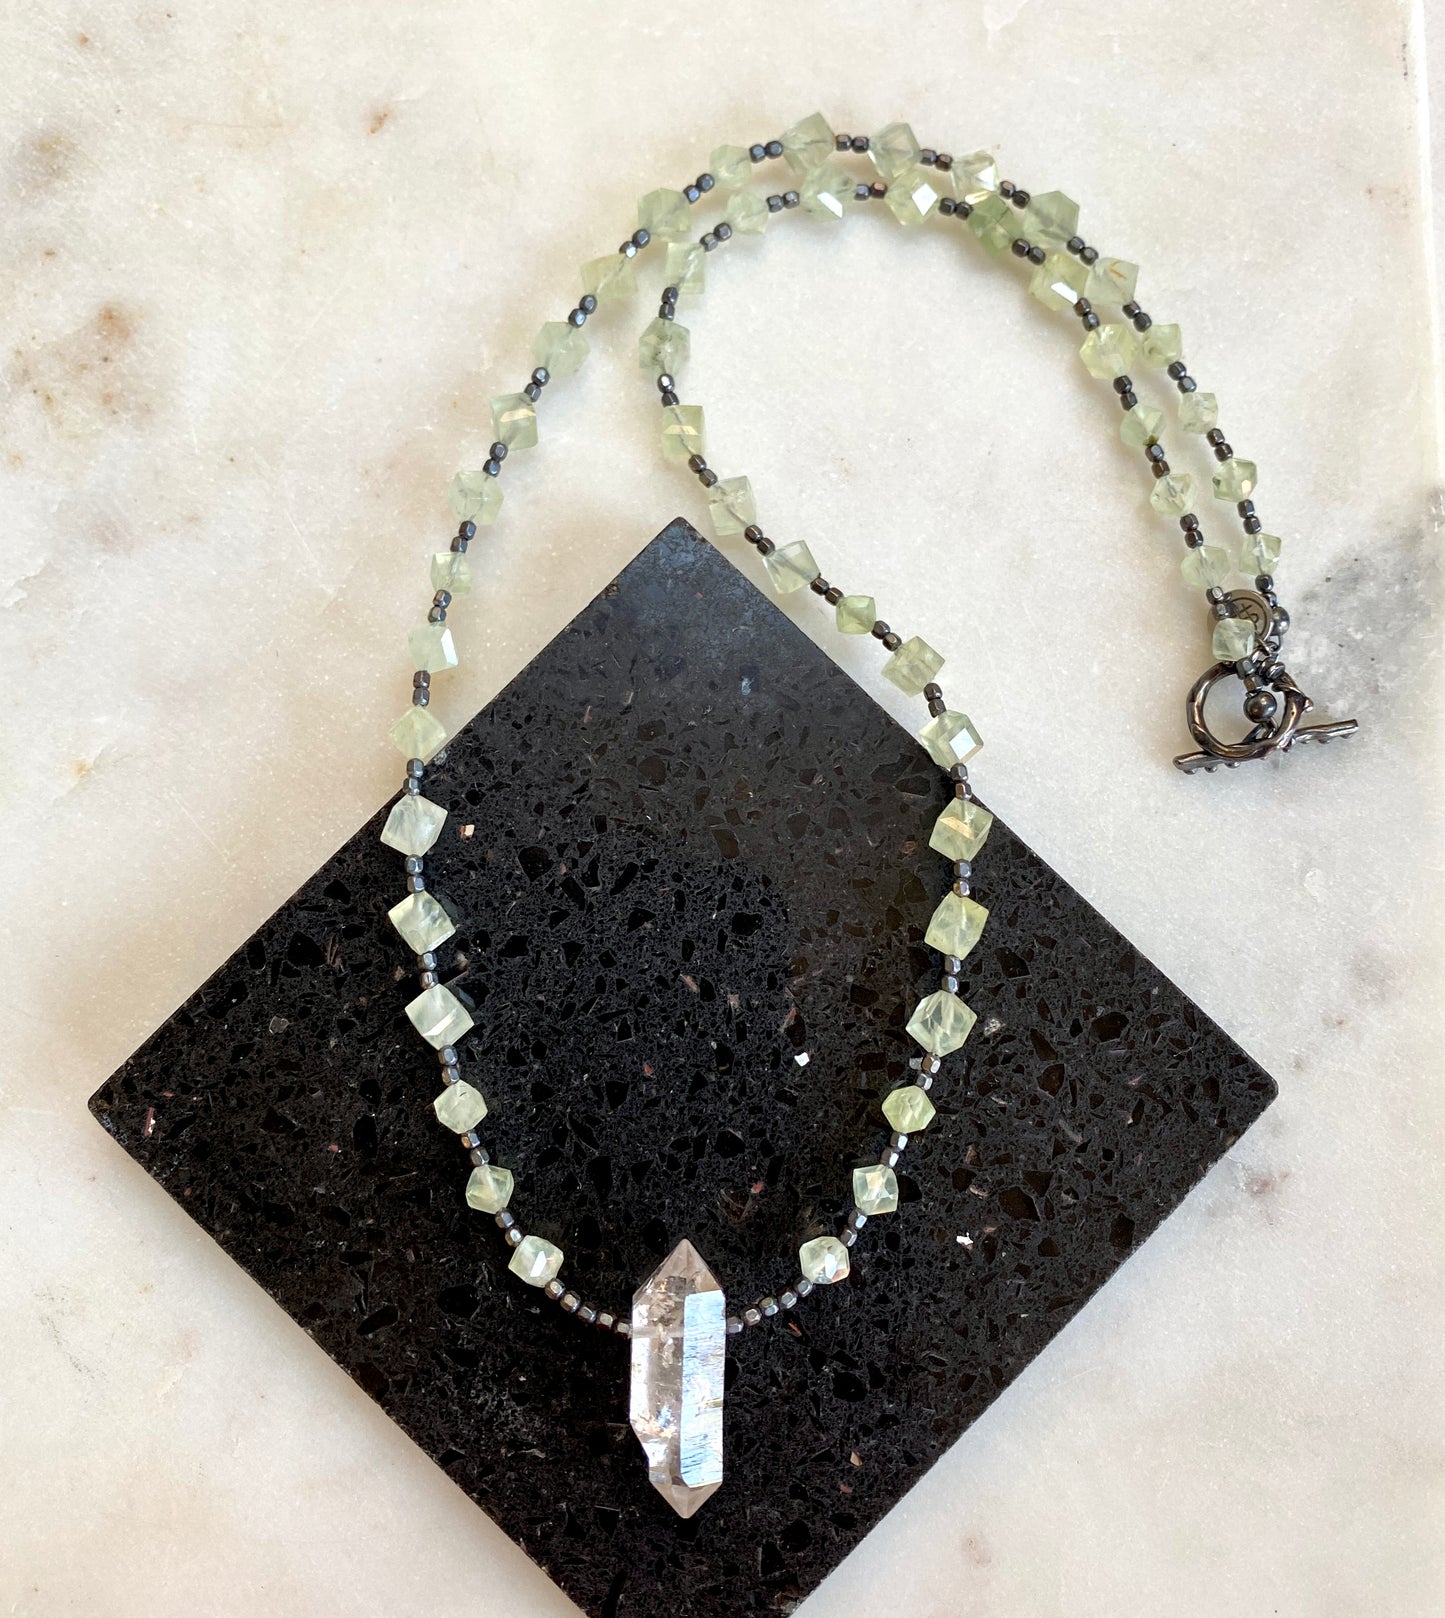 Green geometric prehnite gemstone necklace with Herkimer diamond pendant. 22.5" necklace.